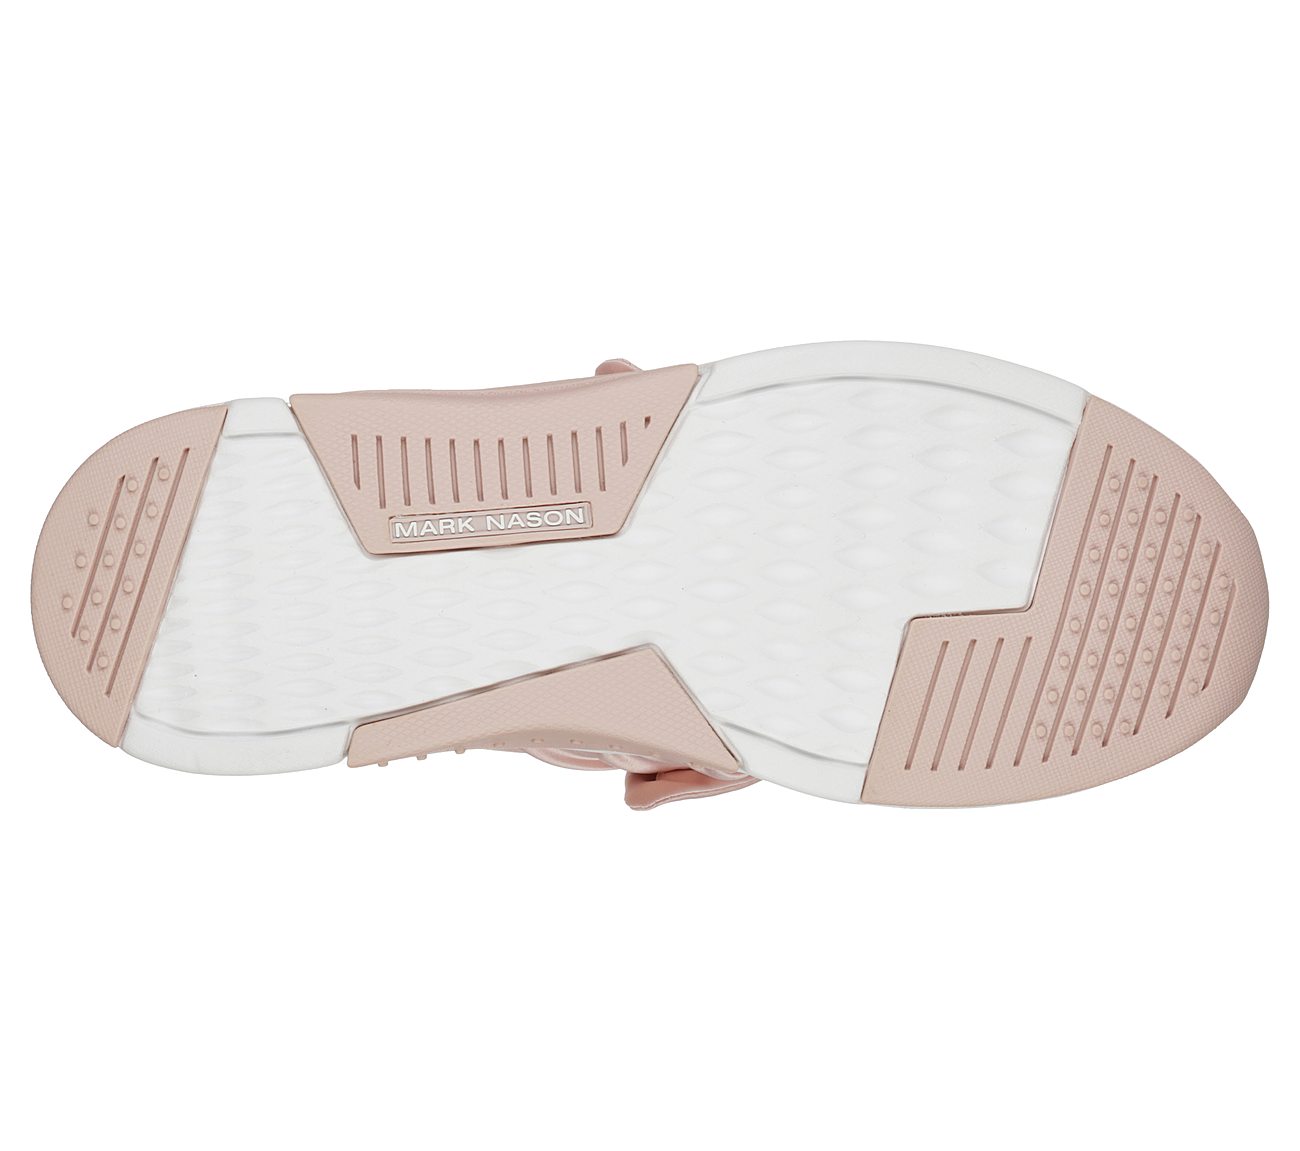 MODERN JOGGER - DEBBIE, WHITE/PINK Footwear Bottom View